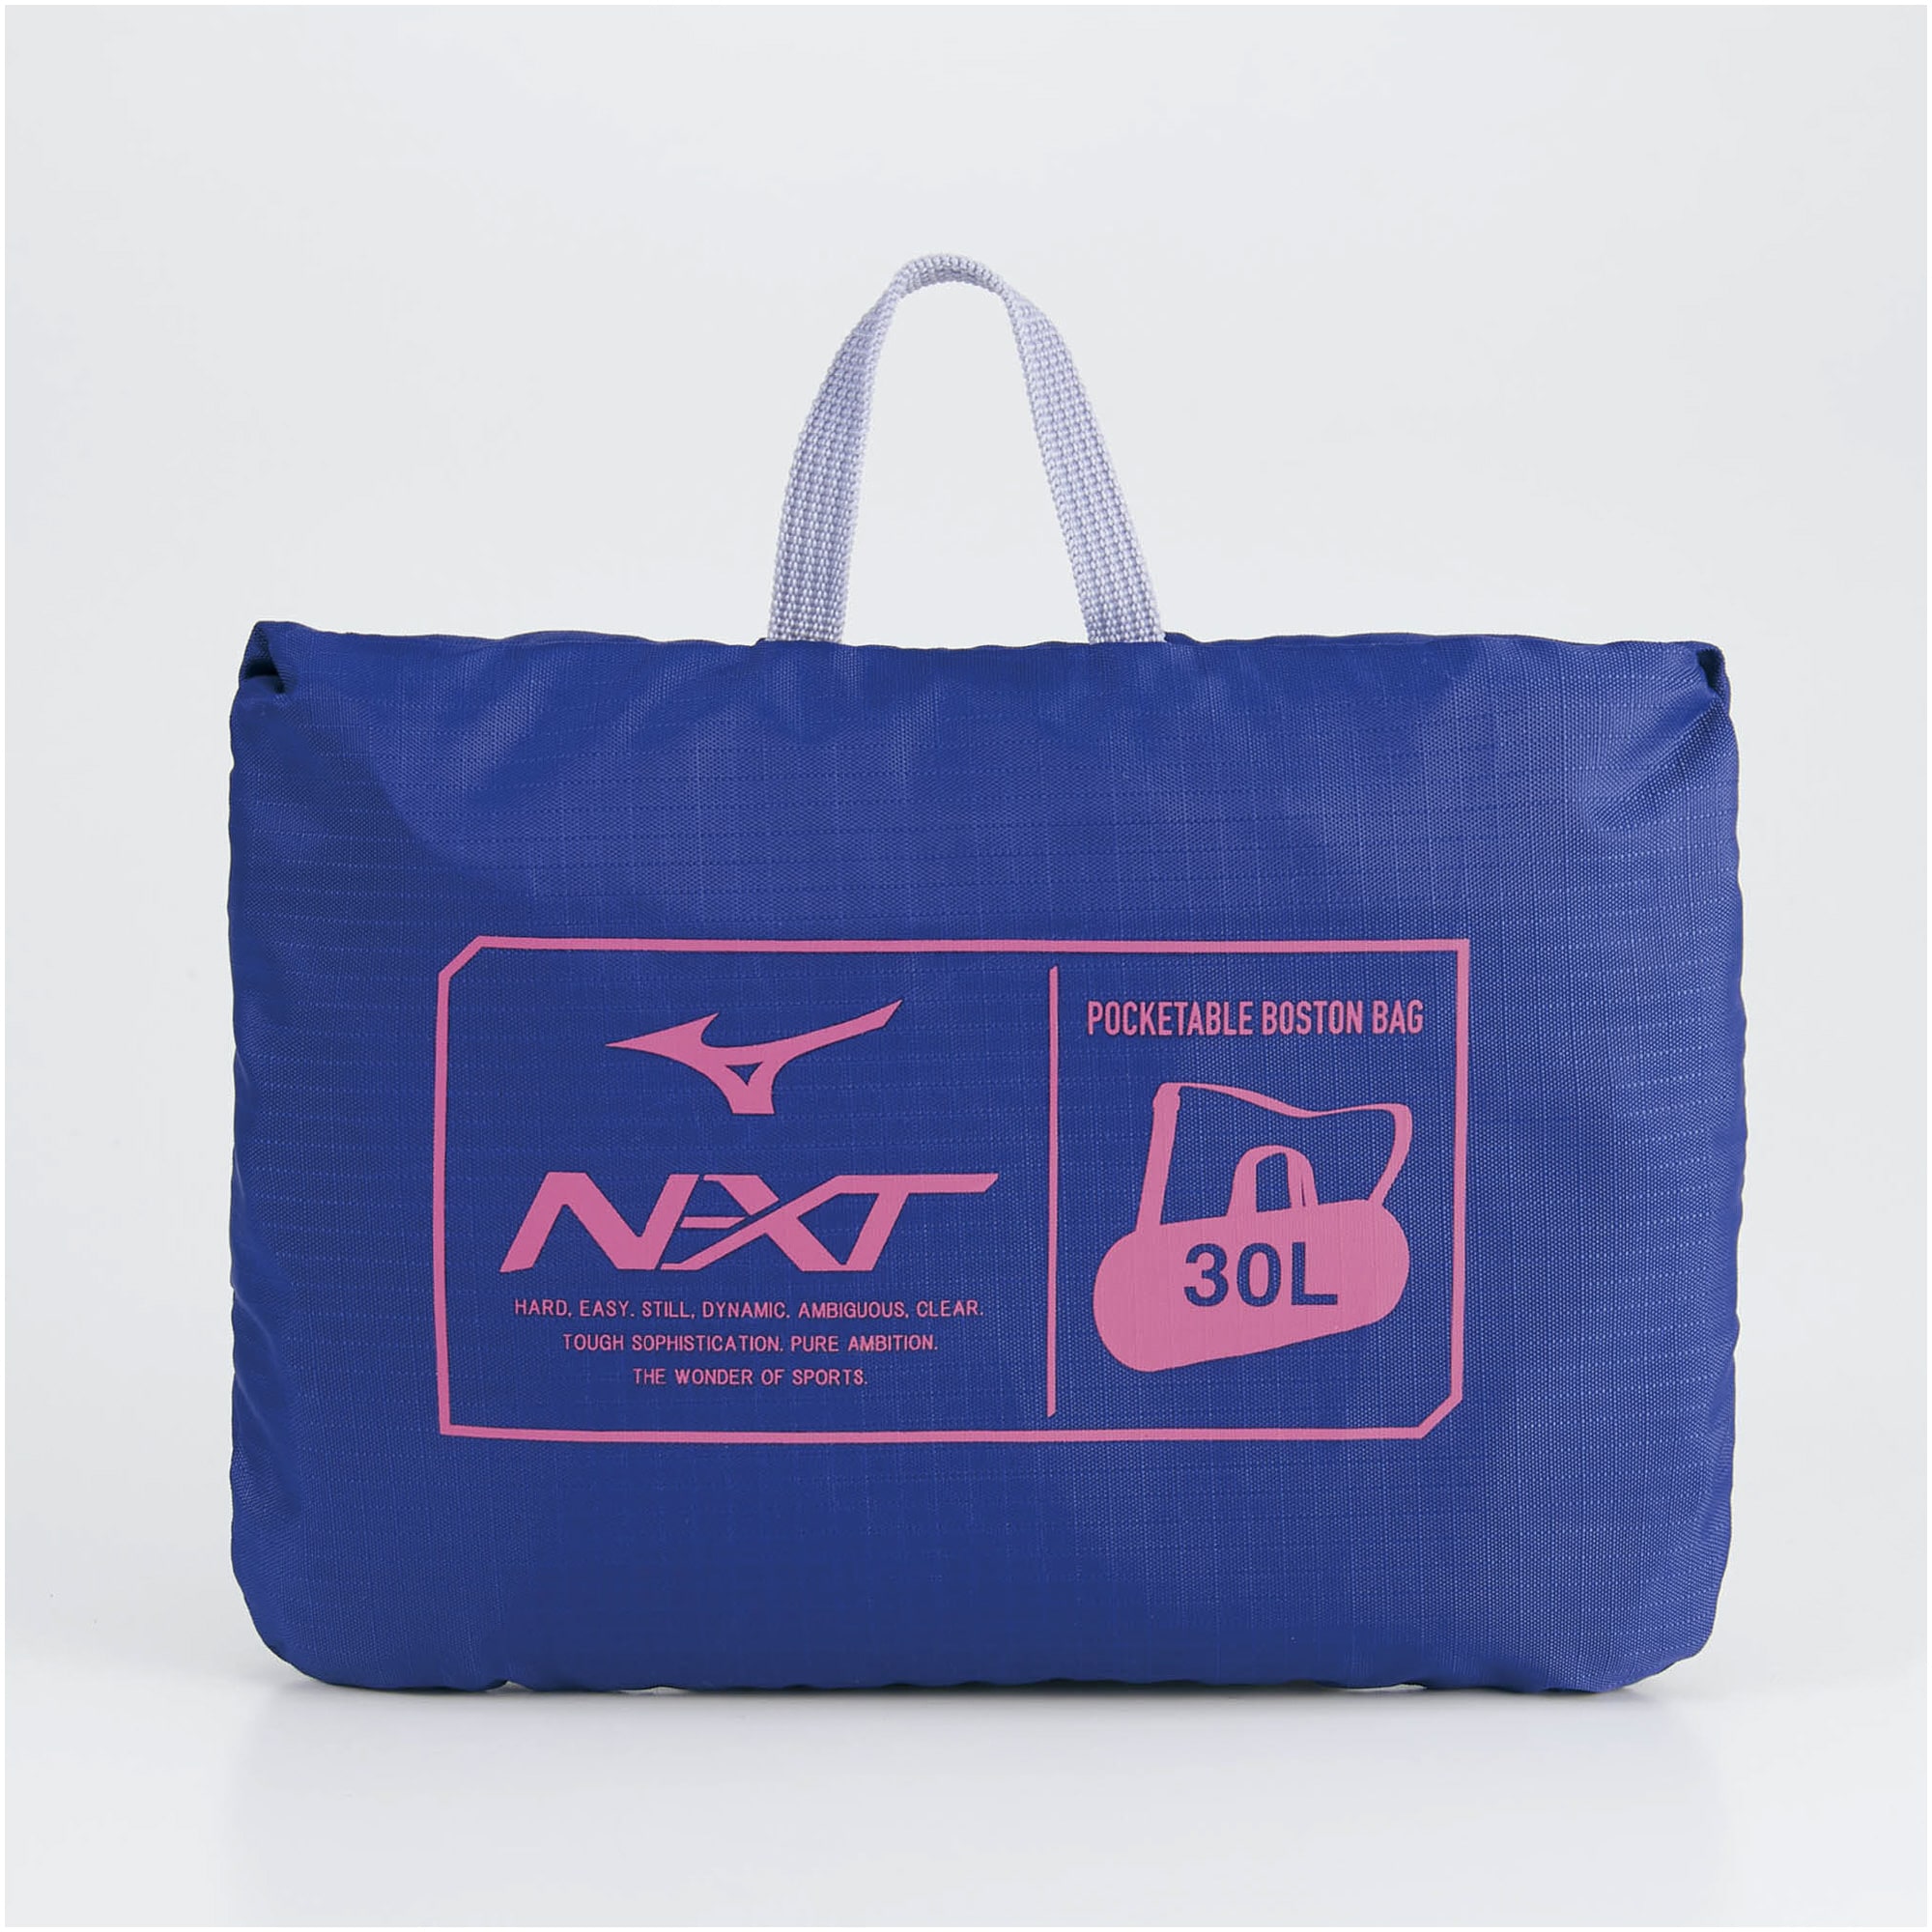 N-XTポケッタブルボストンバッグ|33JM0441|ボストンバッグ|バッグ 